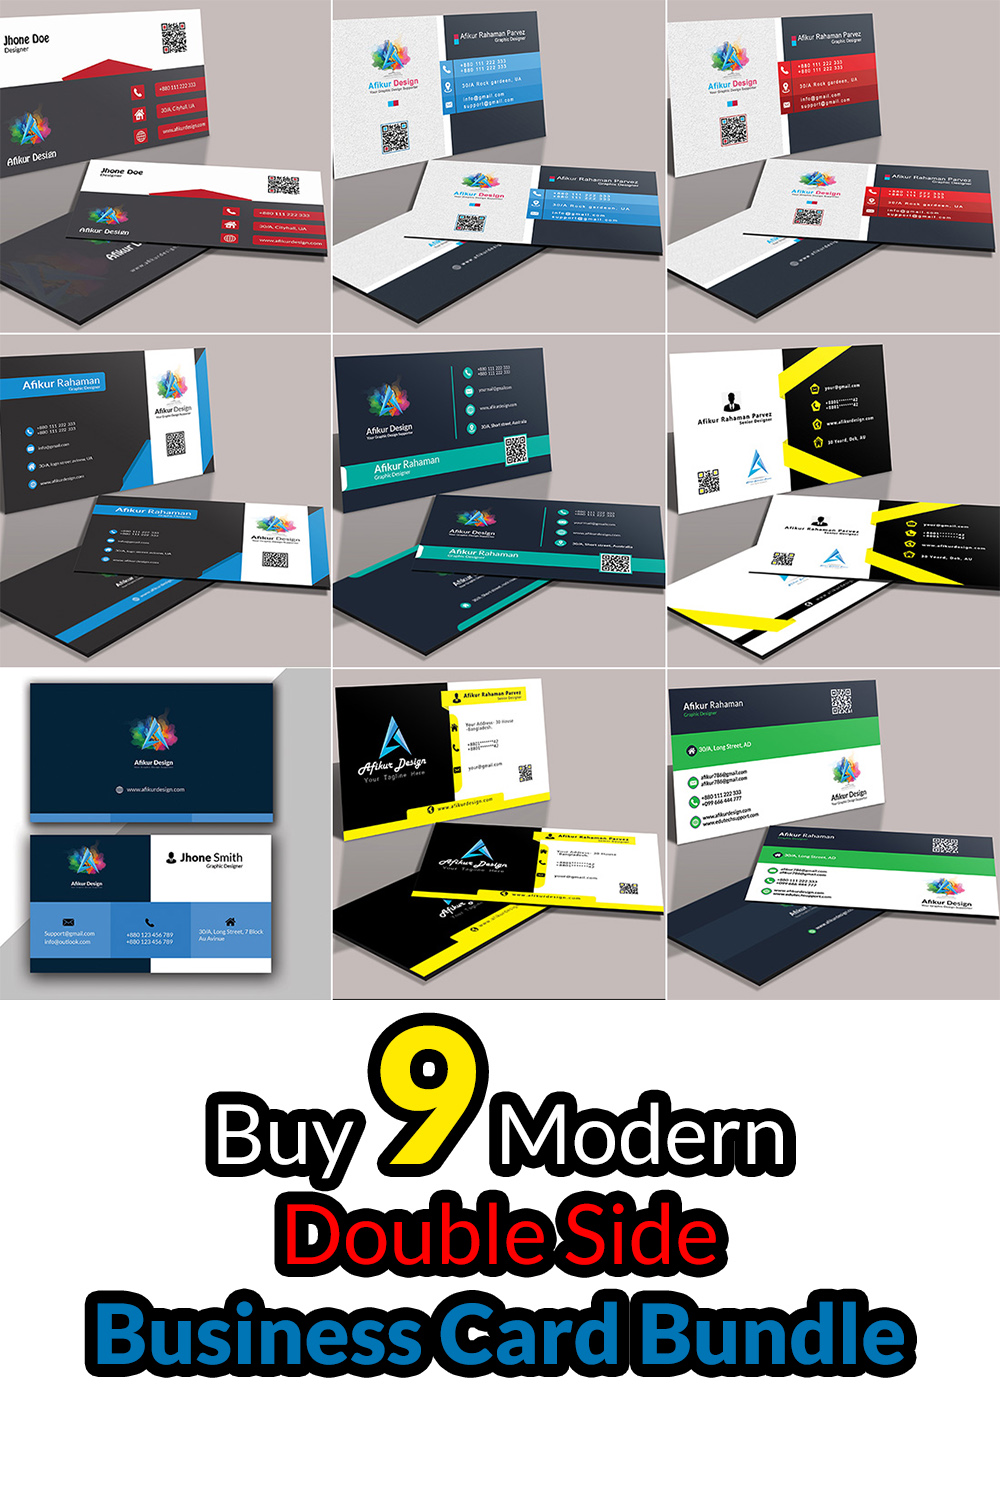 9 Modern Double Side Business Card Bundle pinterest image.